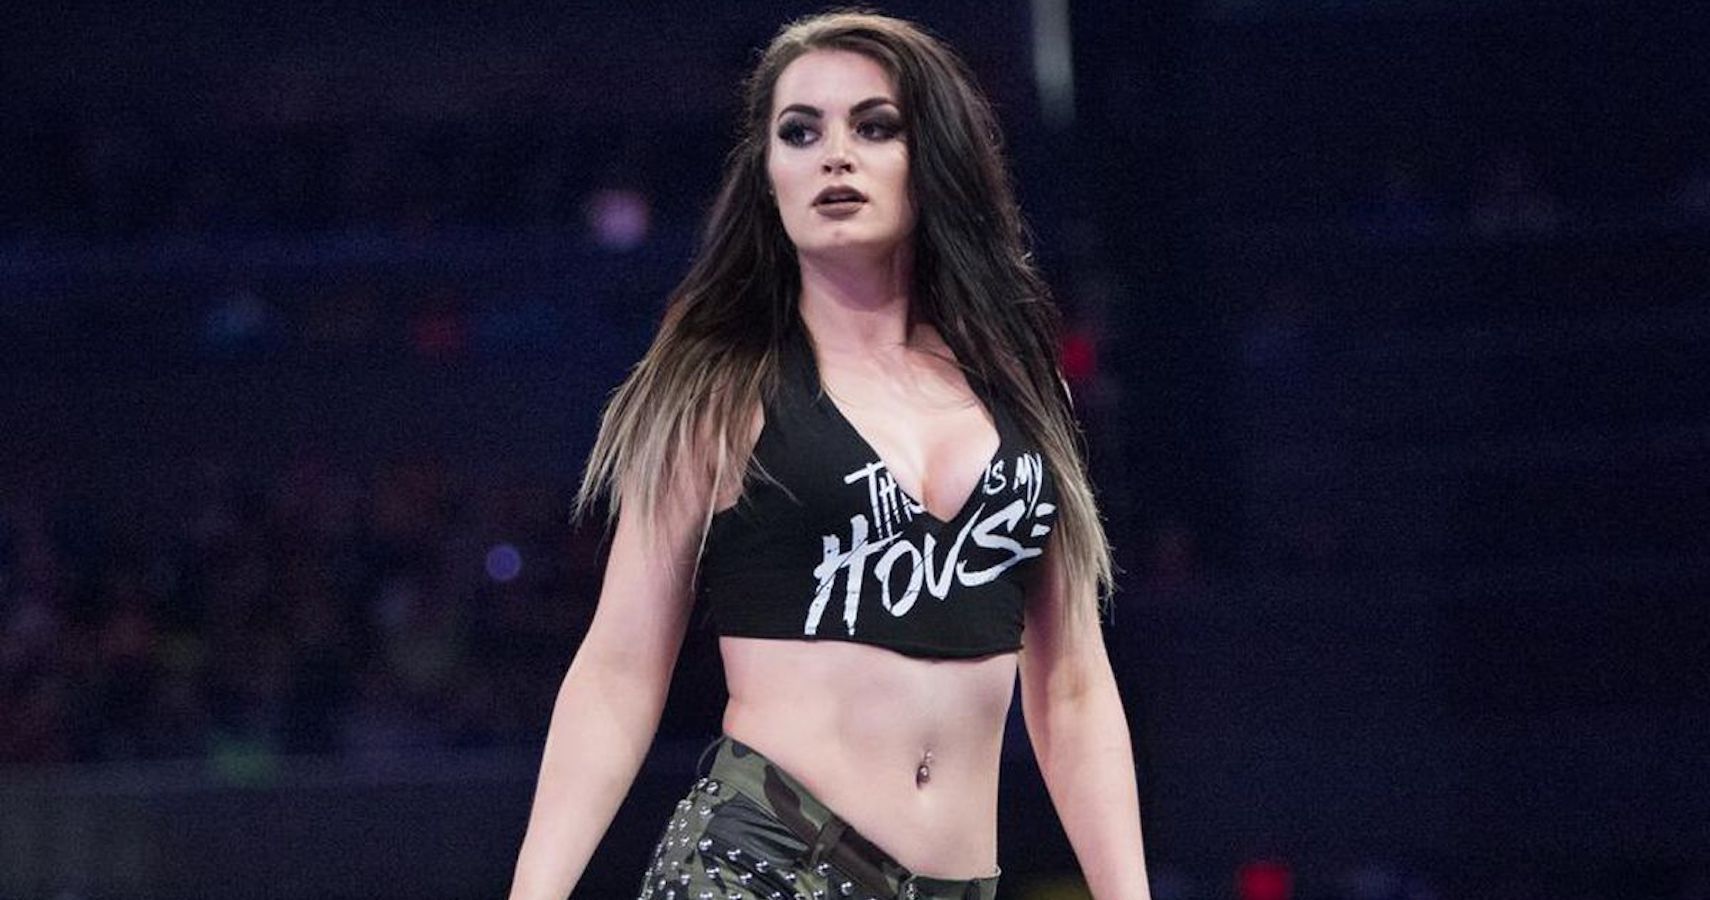 WWE-Paige